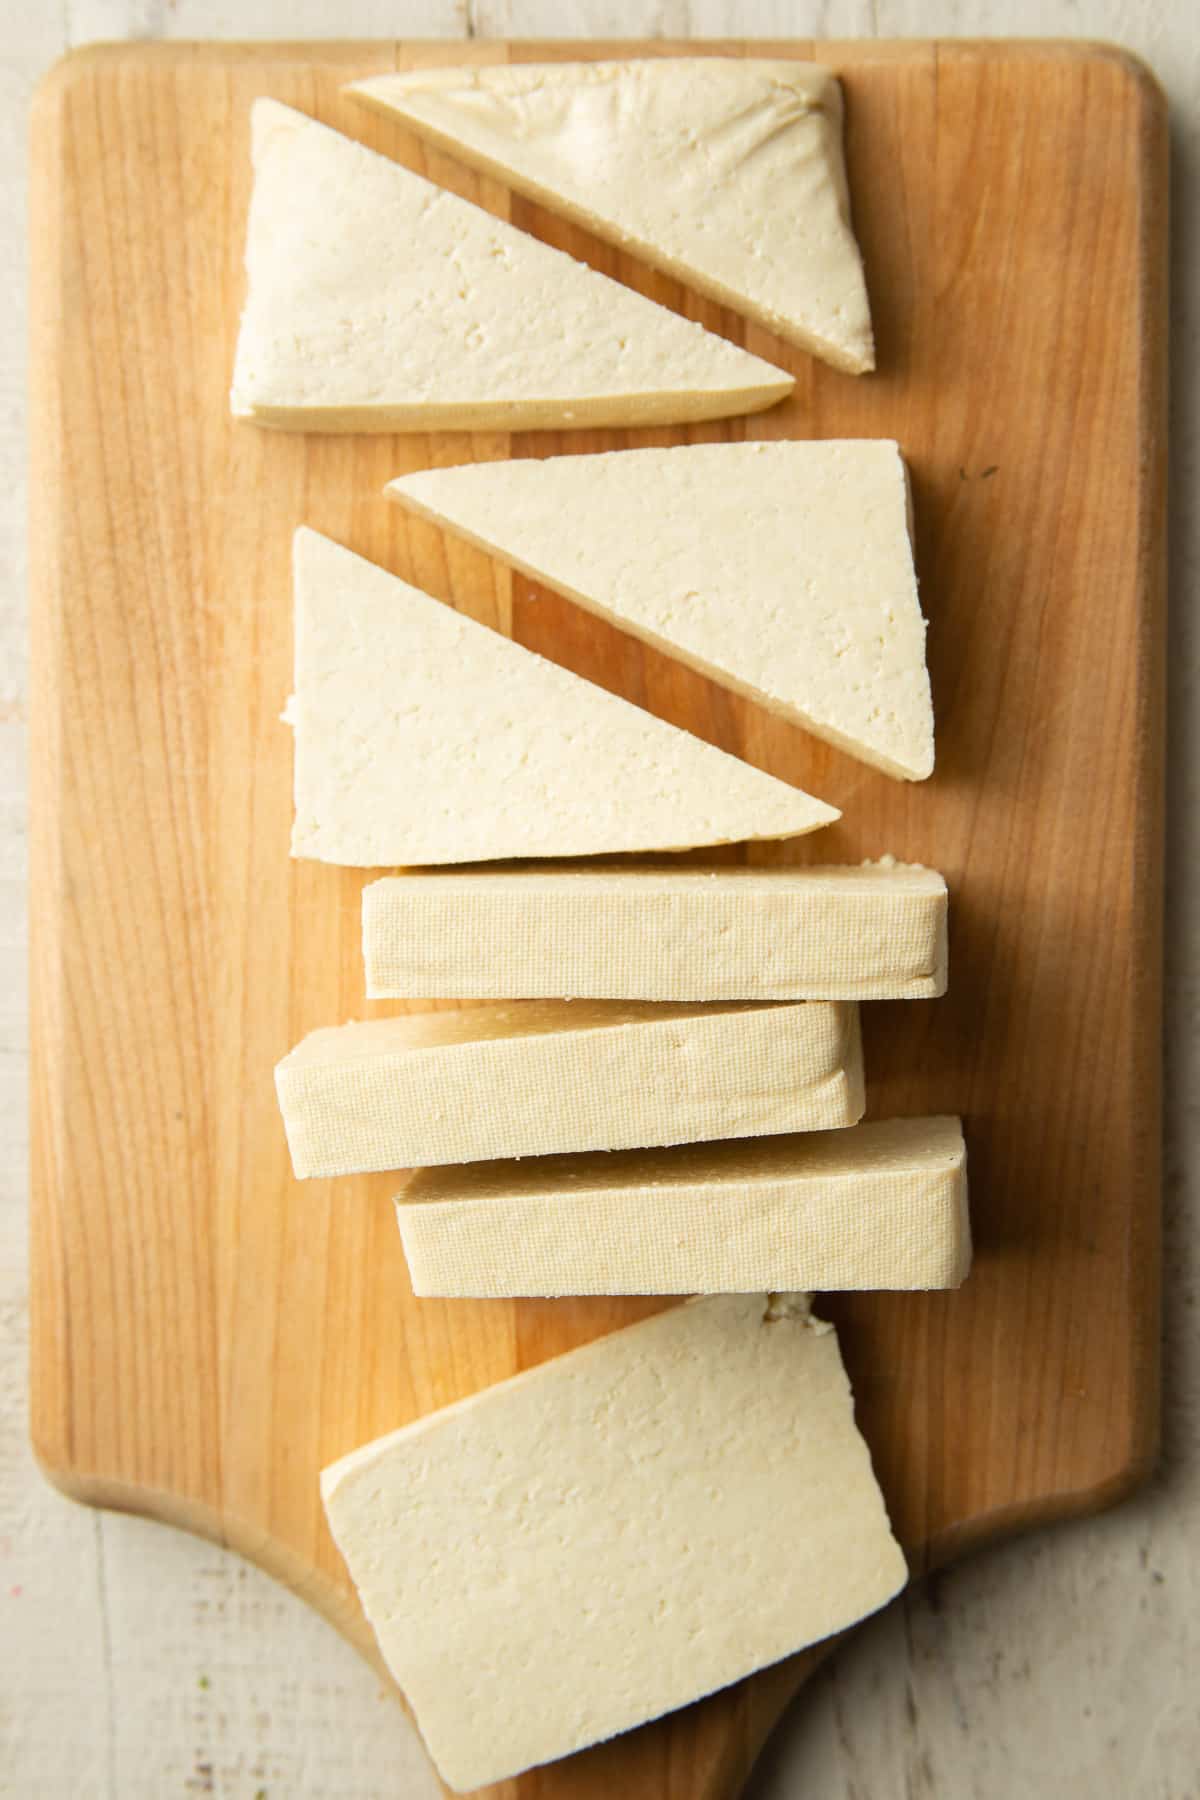 Sliced block of tofu on a cutting board.